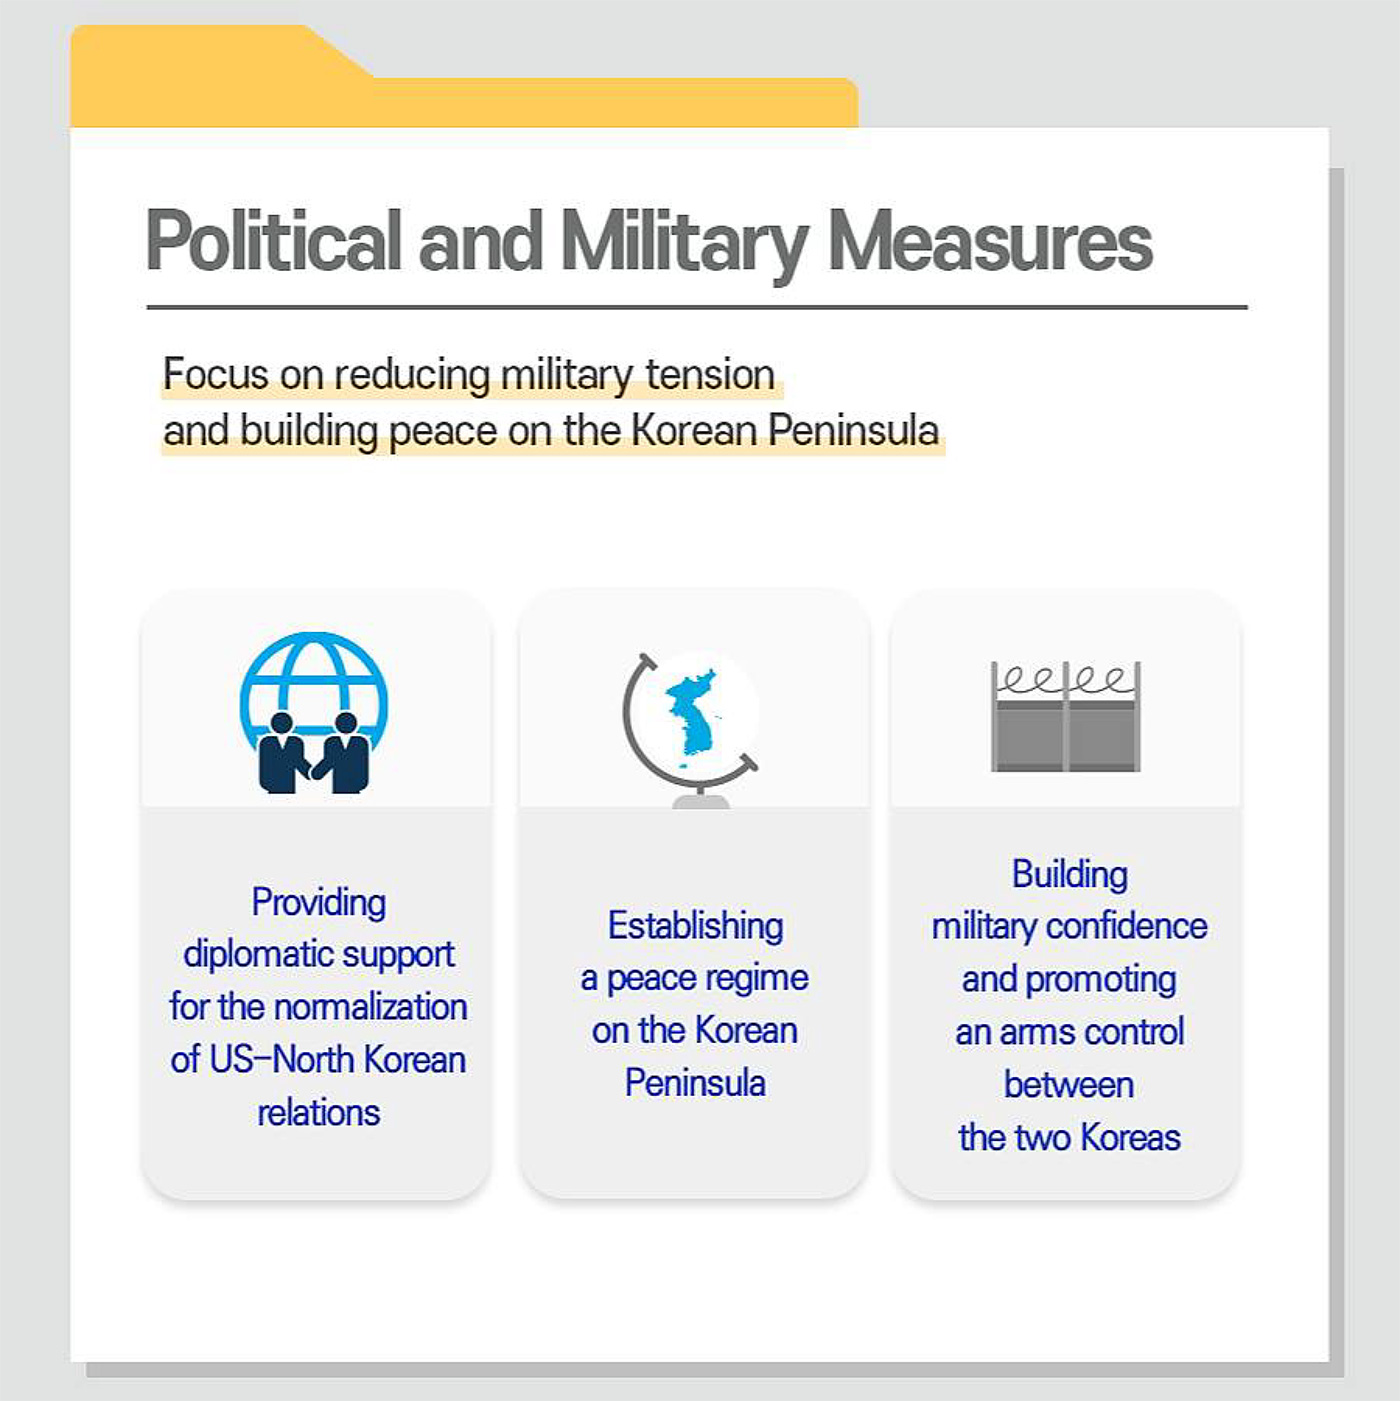 Audacious Initiative for Denuclearized, Peaceful, and Prosperous Korean Peninsula09